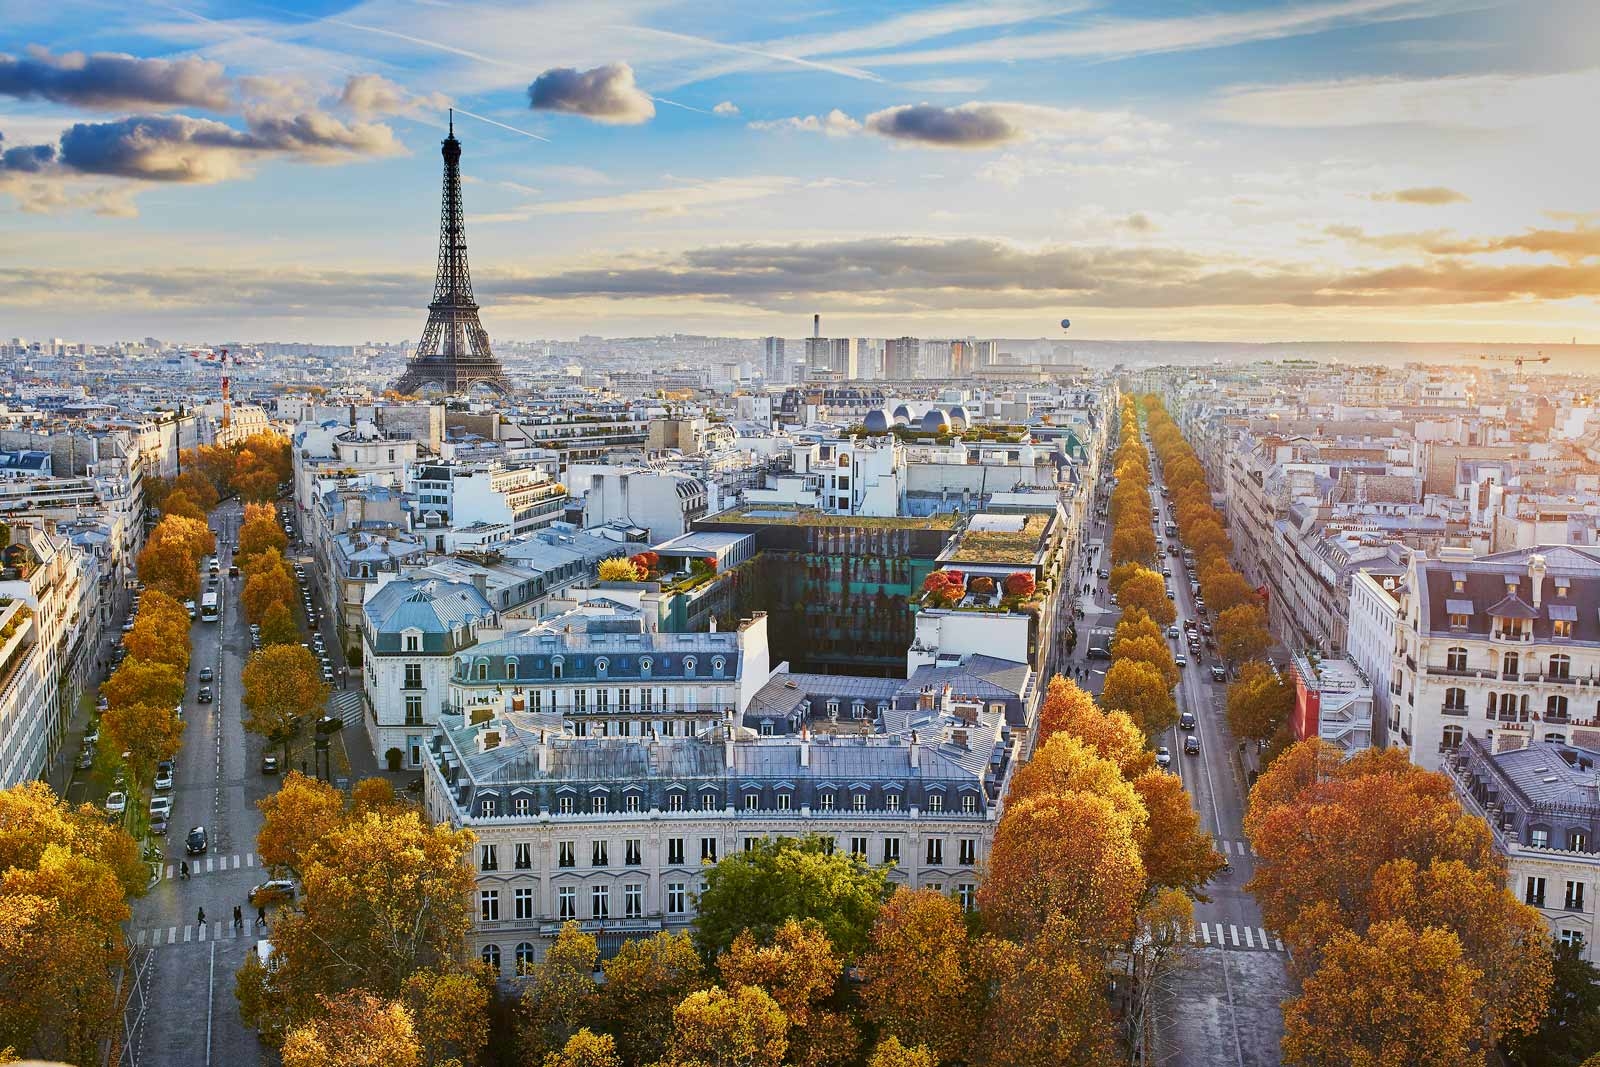 Best Hotels in Paris with Eiffel Tower Views